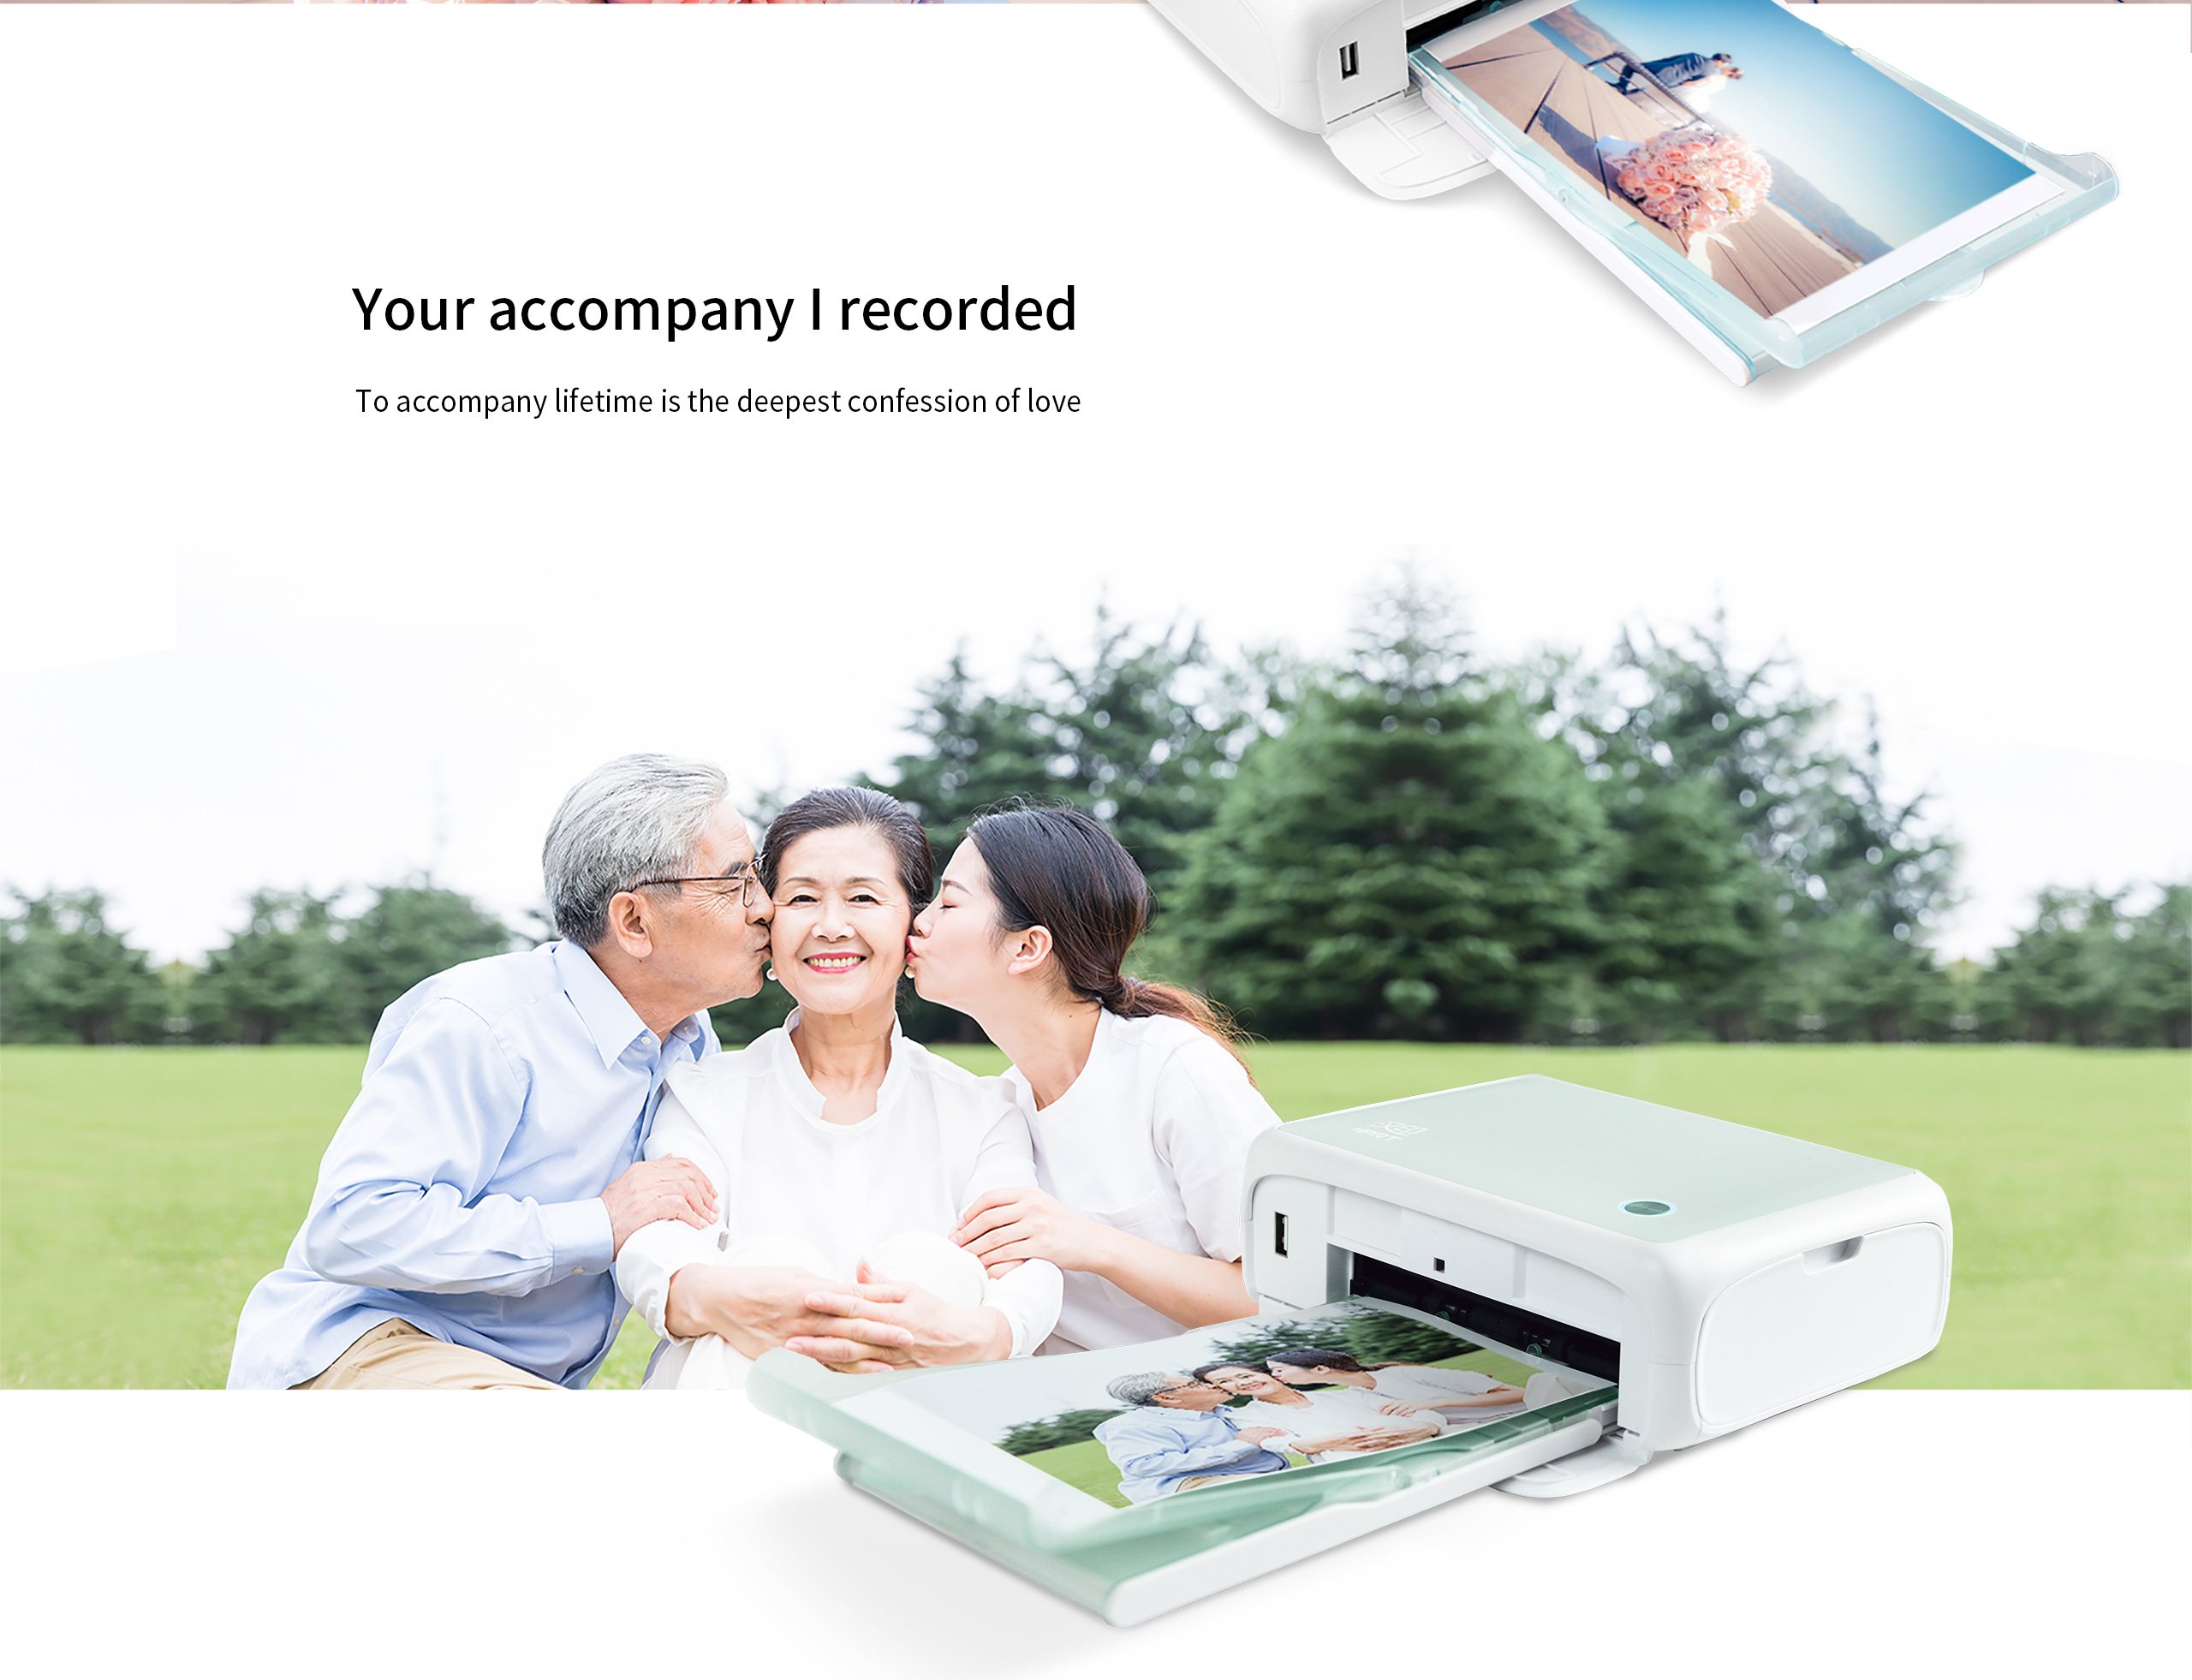  HPRT Impresora fotográfica 4x6 CP4000L Impresora portátil de  sublimación de tinte térmico para iPhone/Android/Laptop/MacBook, impresión  de video AR : Productos de Oficina